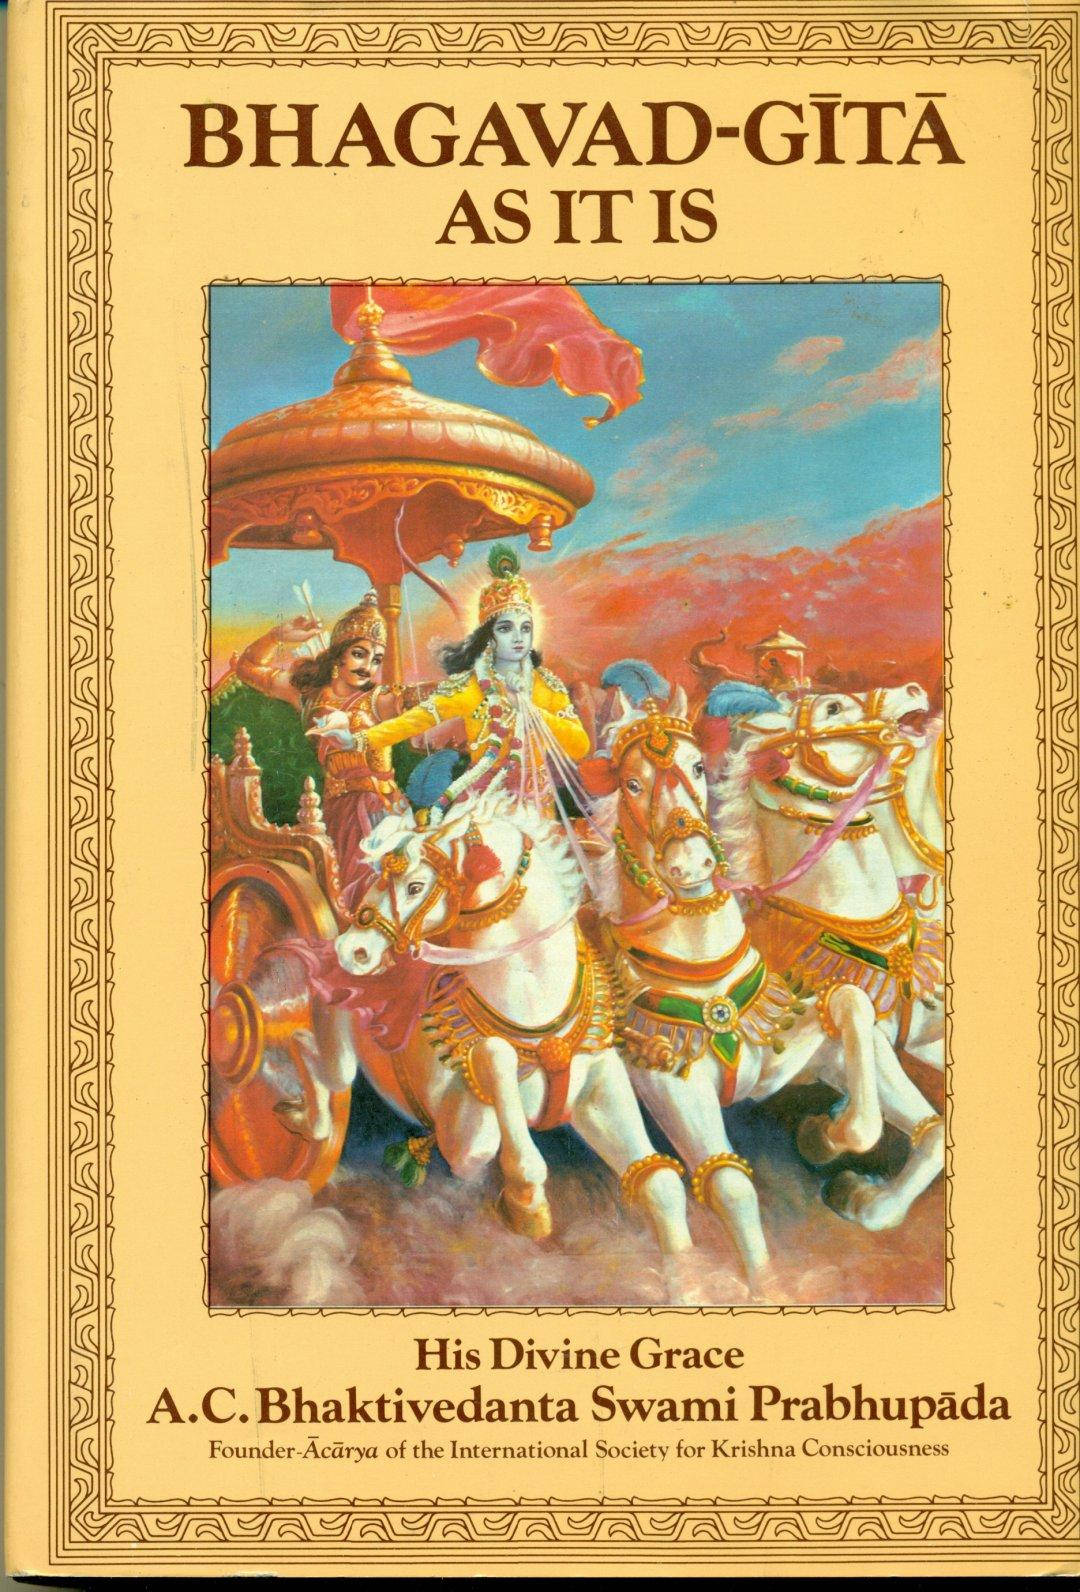 Bhagavad Gita As It Is Book Cover Wallpaper